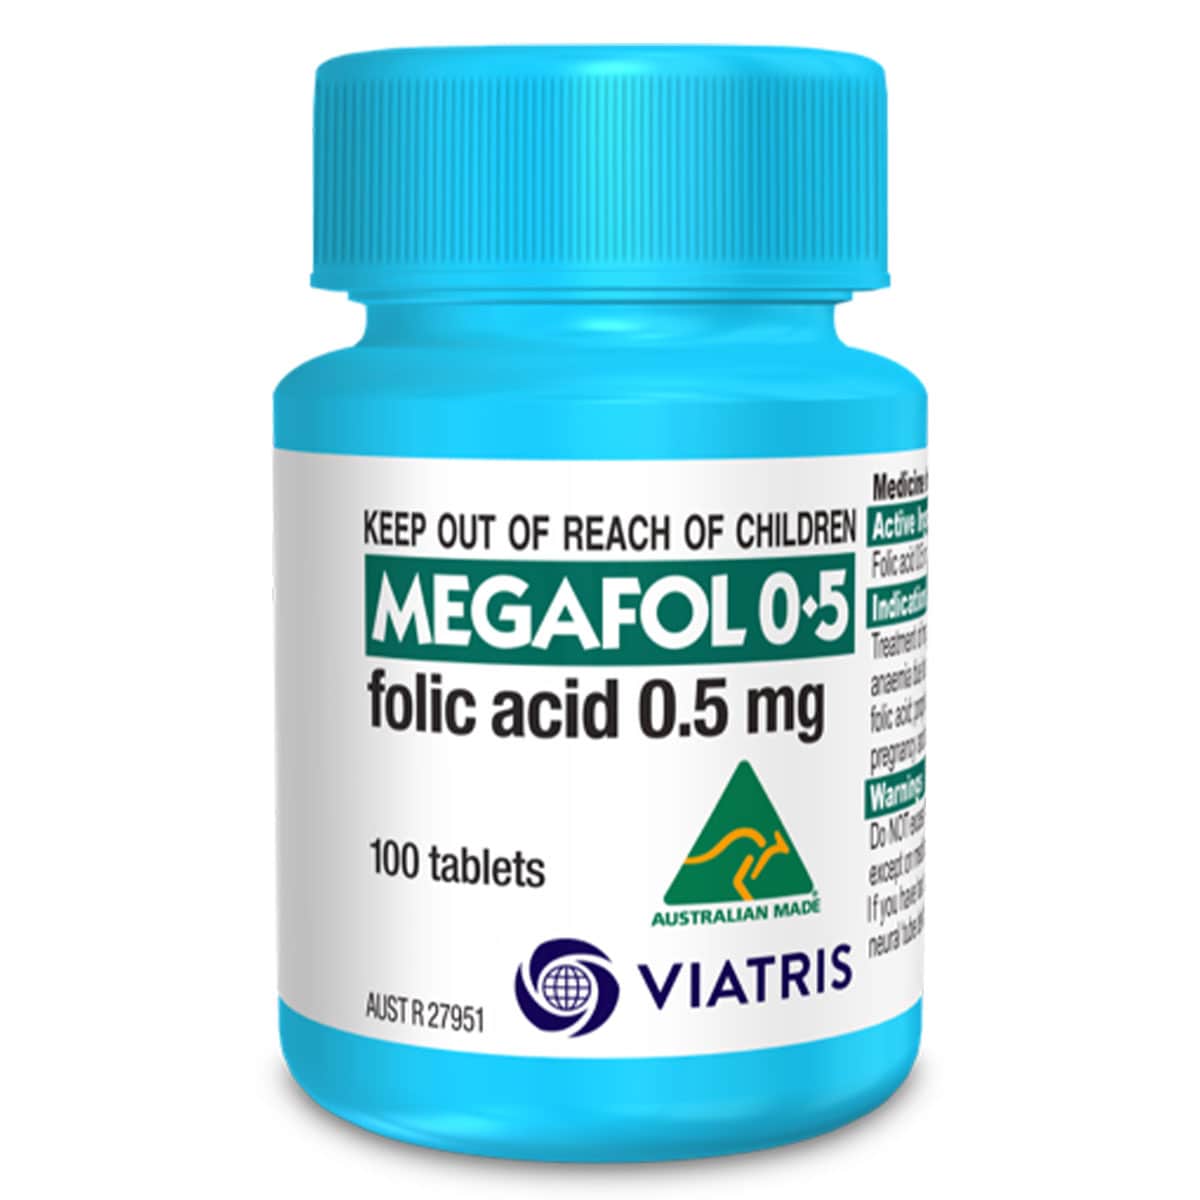 Megafol Folic Acid (0.5mg) 100 Tablets